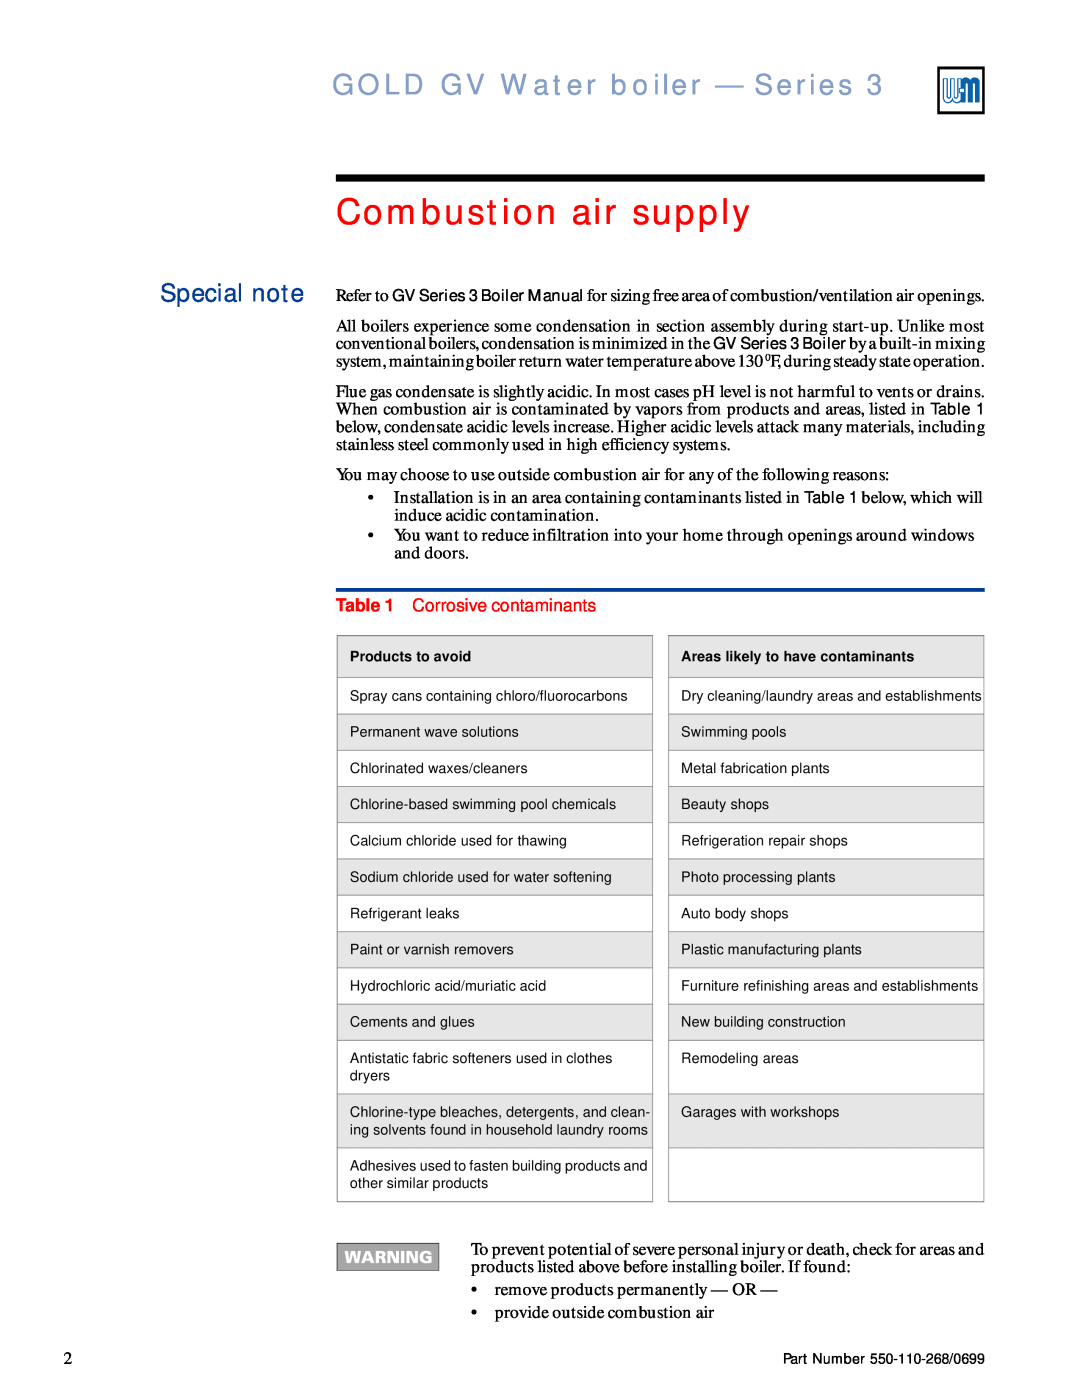 Weil-McLain STAR-34 manual Combustion air supply, GOLD GV Water boiler - Series, Corrosive contaminants 